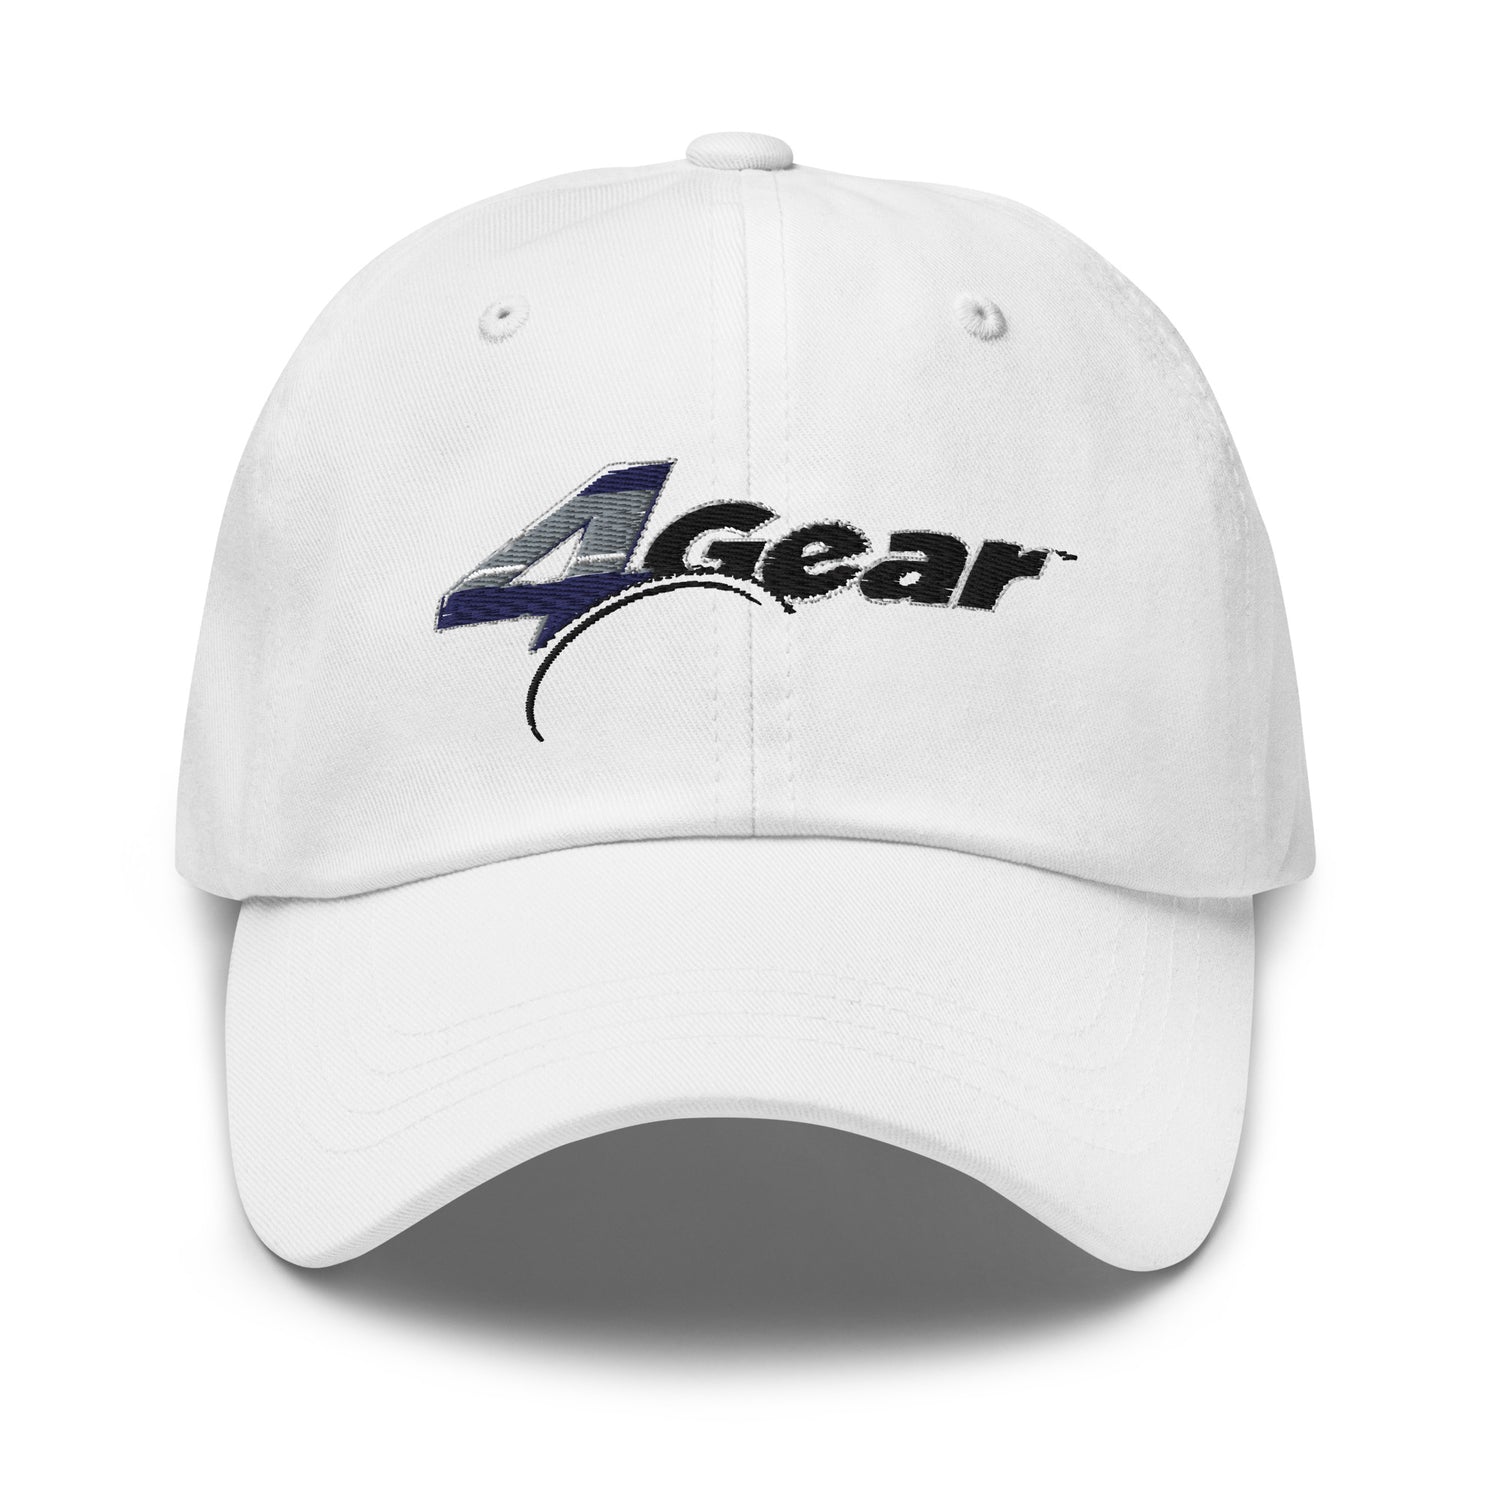 4GEAR Low Profile Ballcap